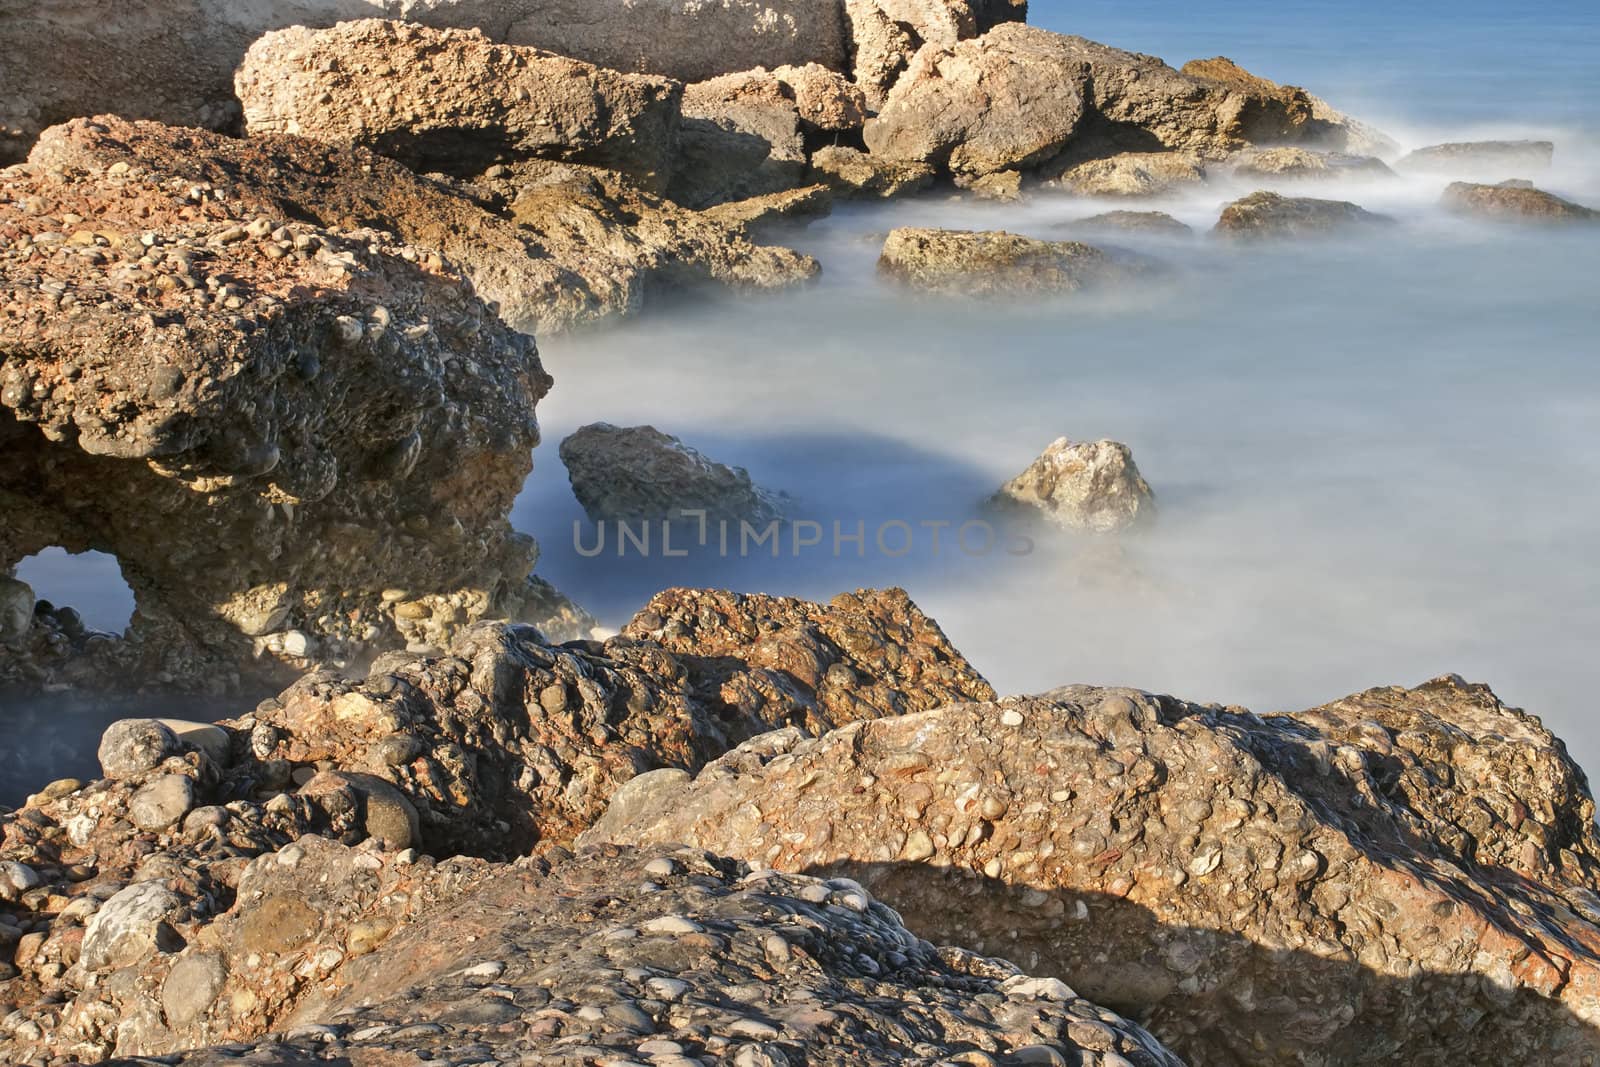 long-exposure photograph of the Costa del Azahar in Spain